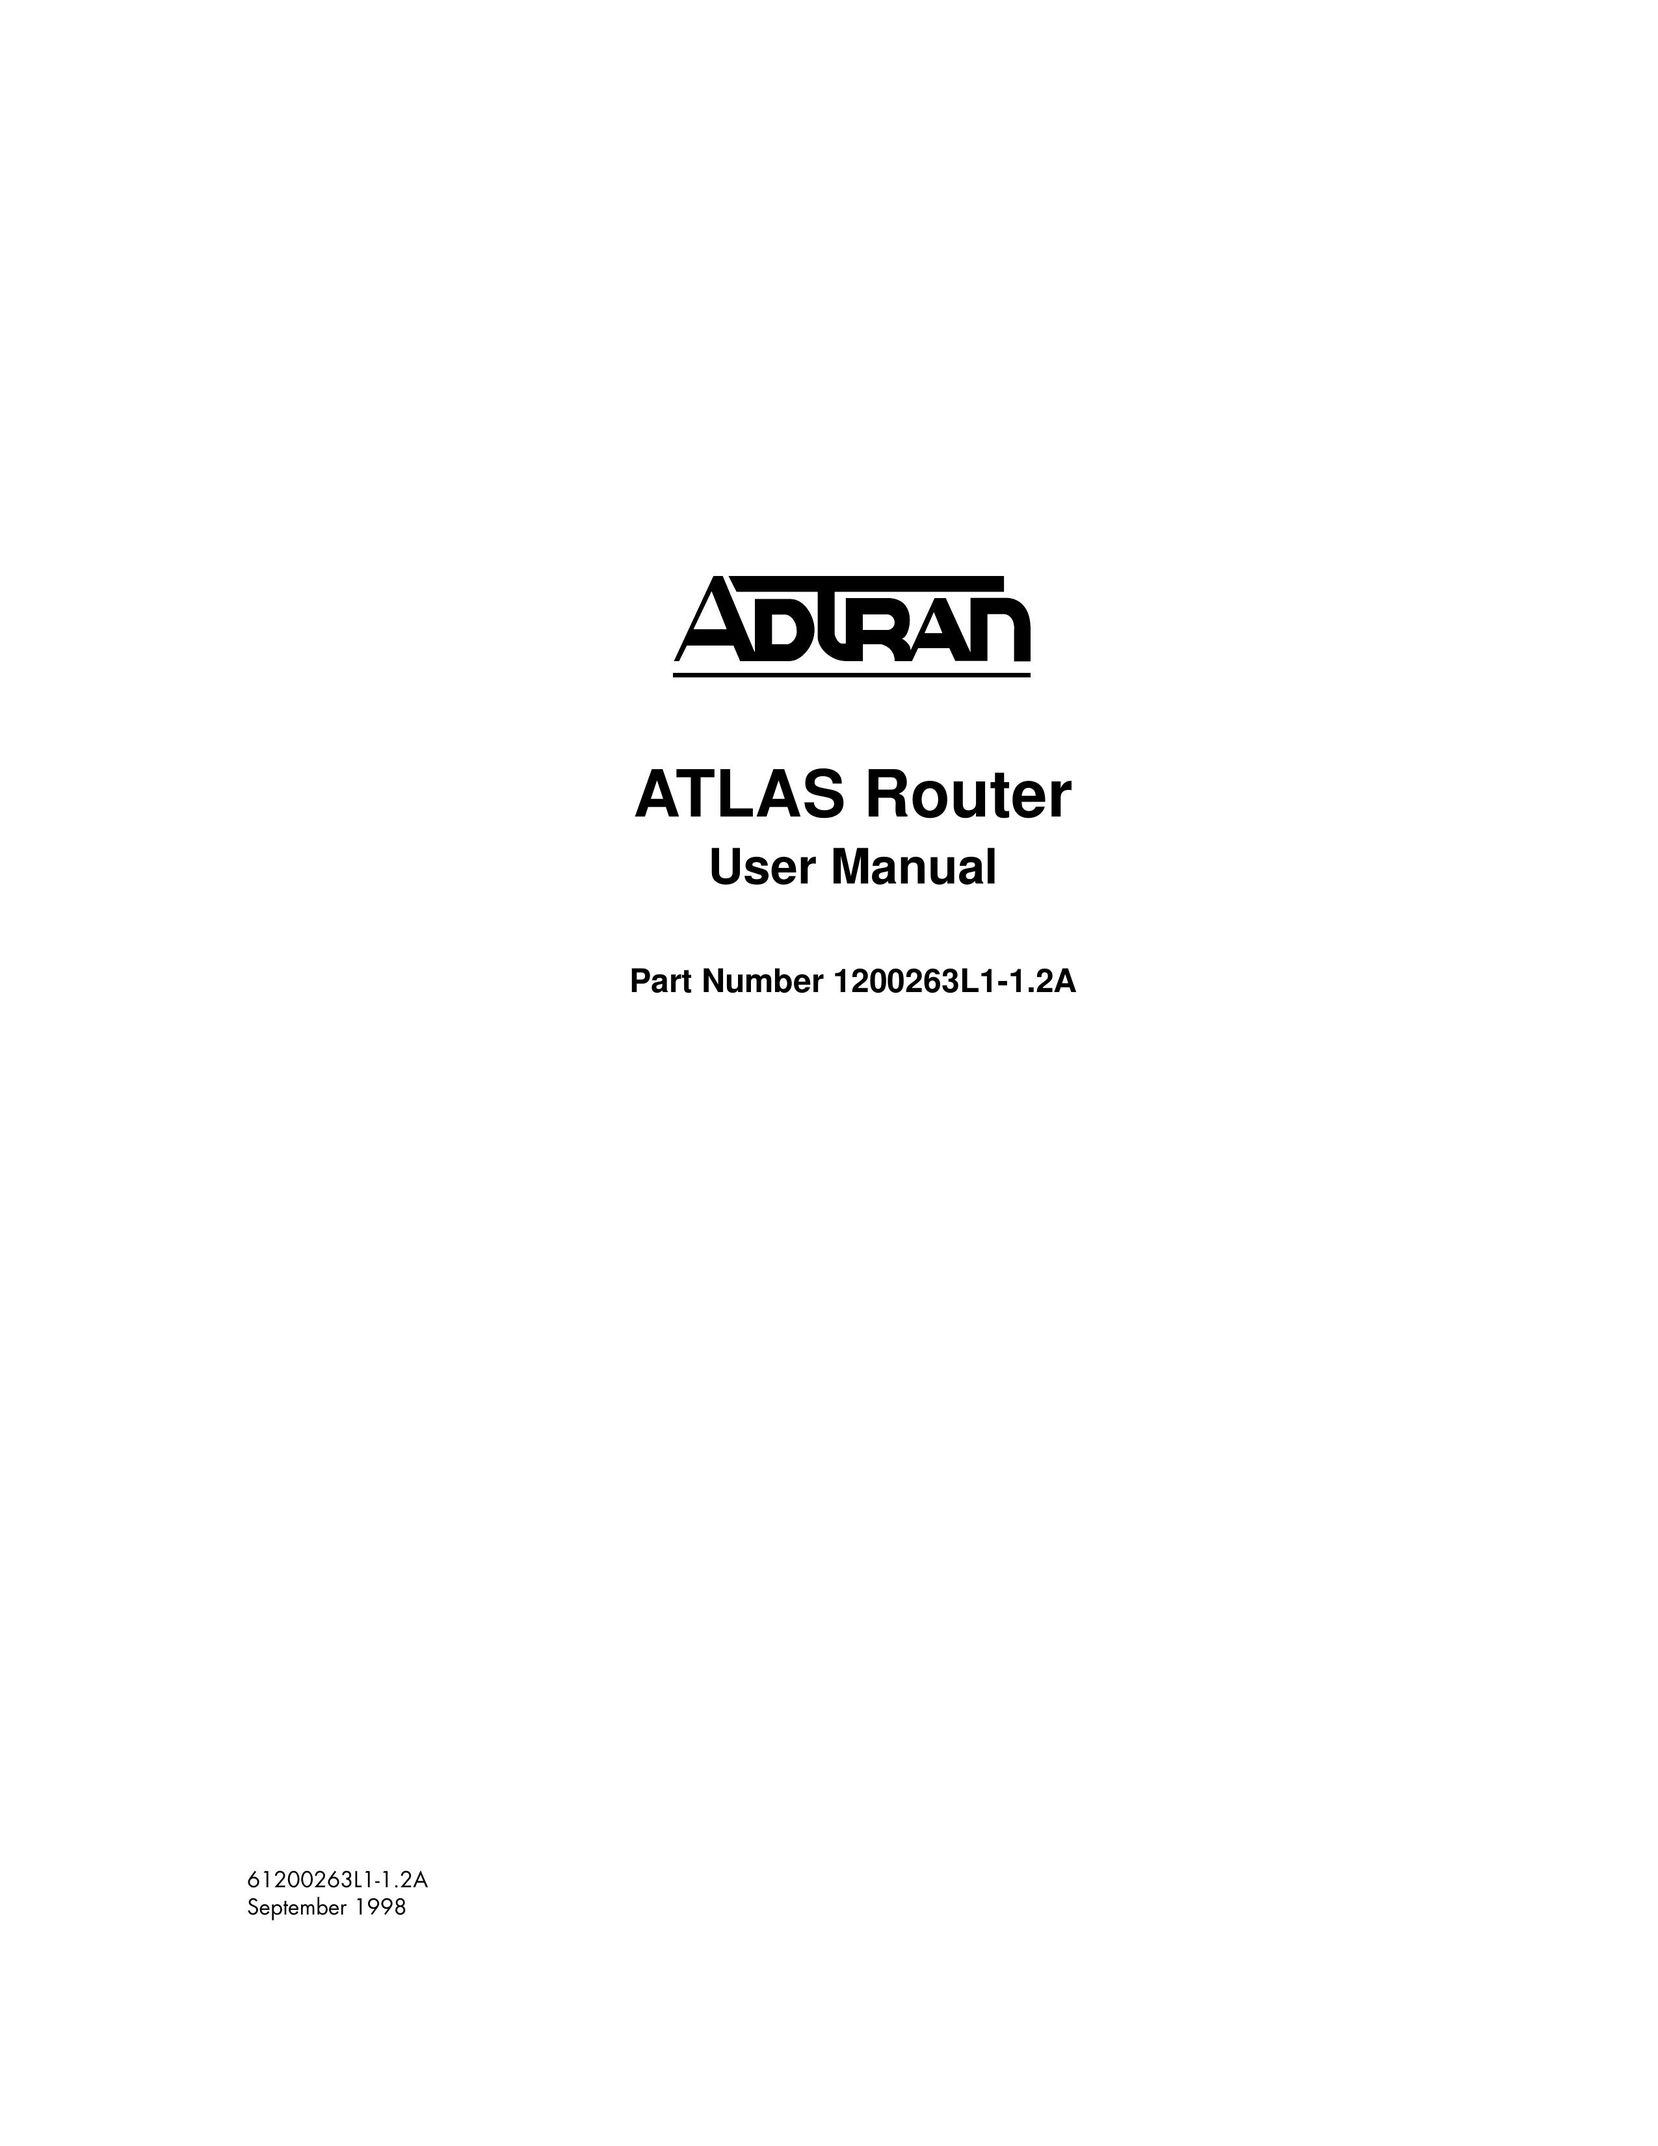 ADTRAN 1200263L1-1.2A Network Router User Manual